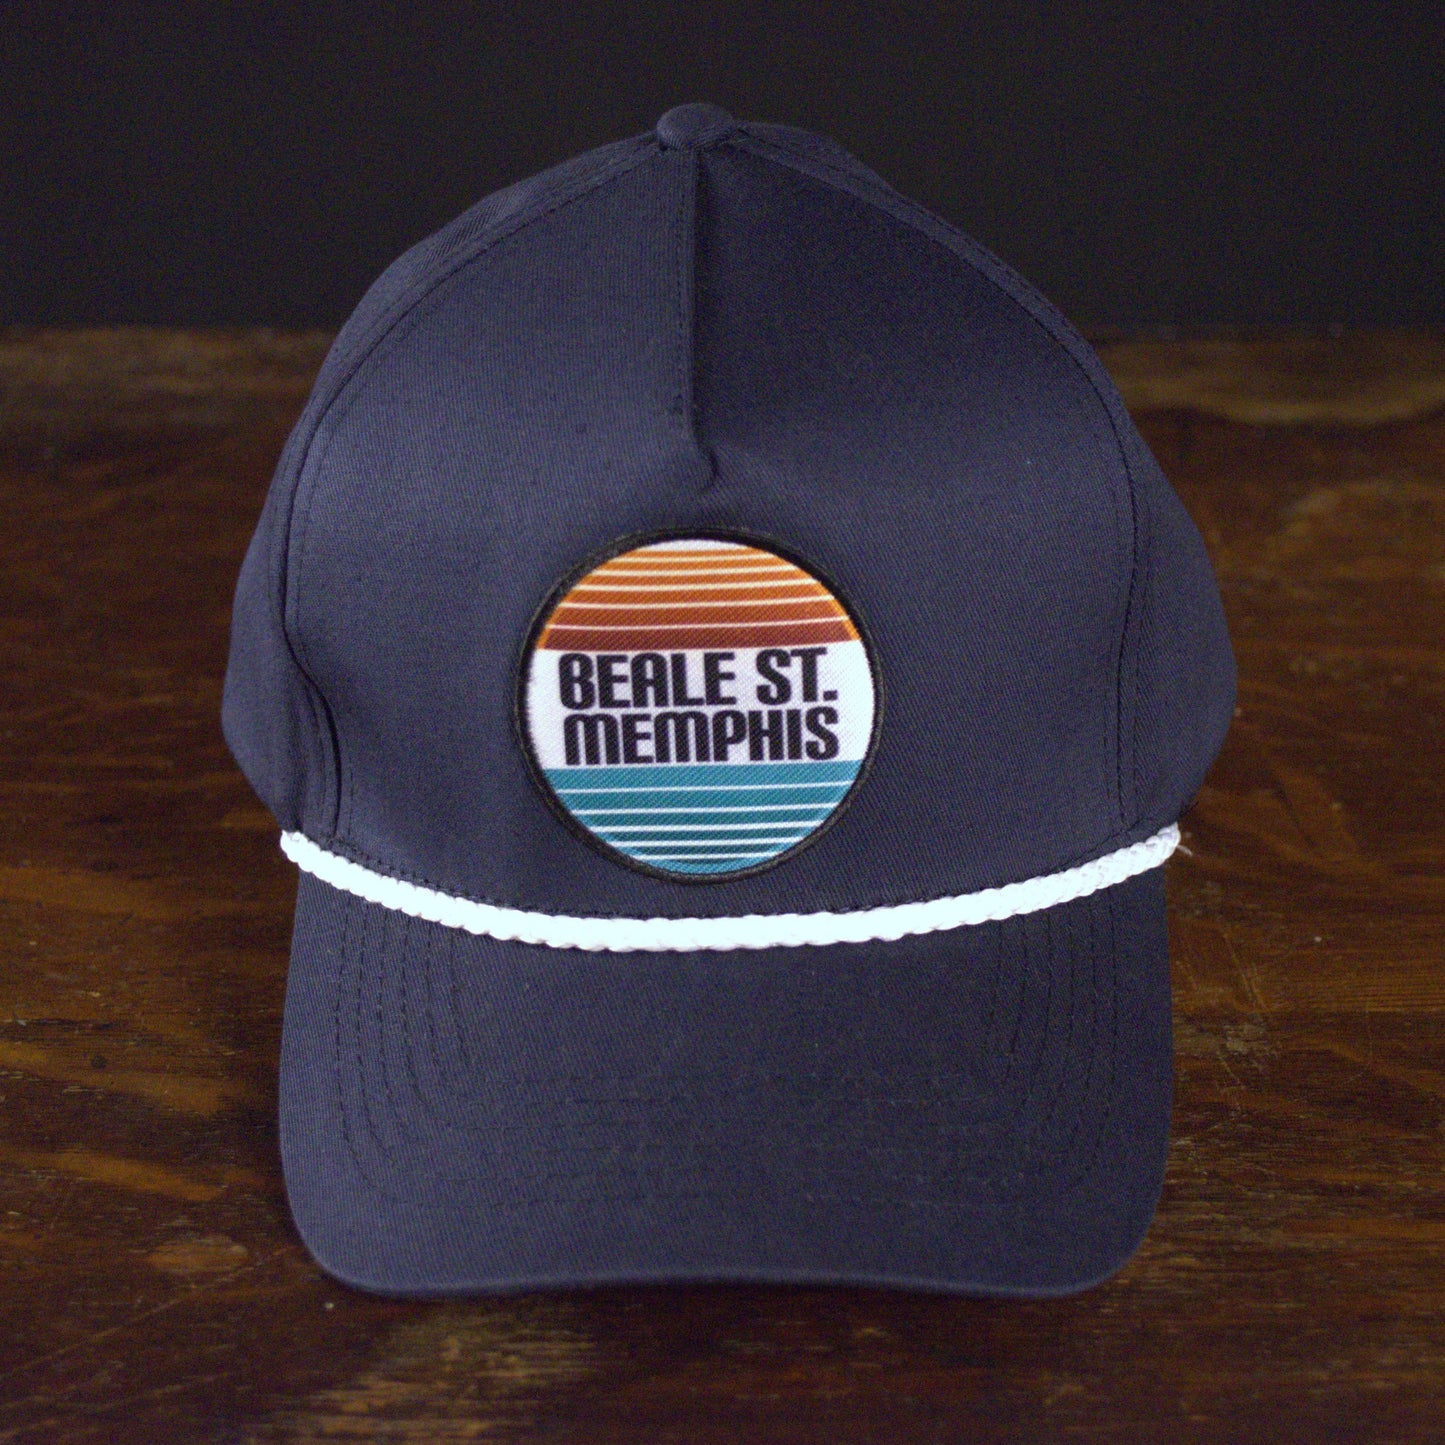 Beale St. Stripes Navy Blue Hat